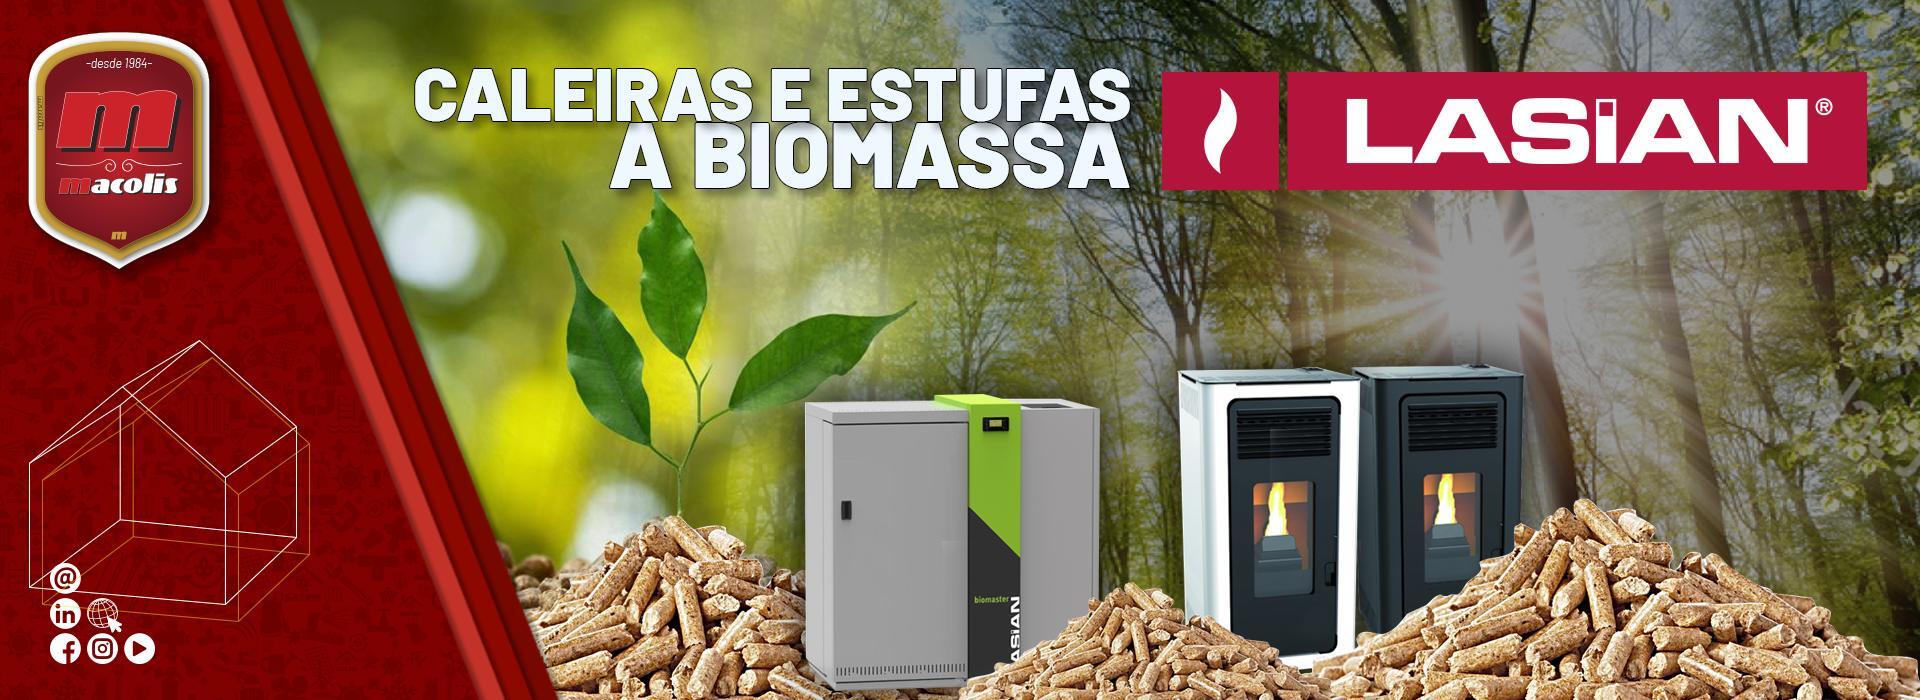 Caldeiras e Estufas Biomassa